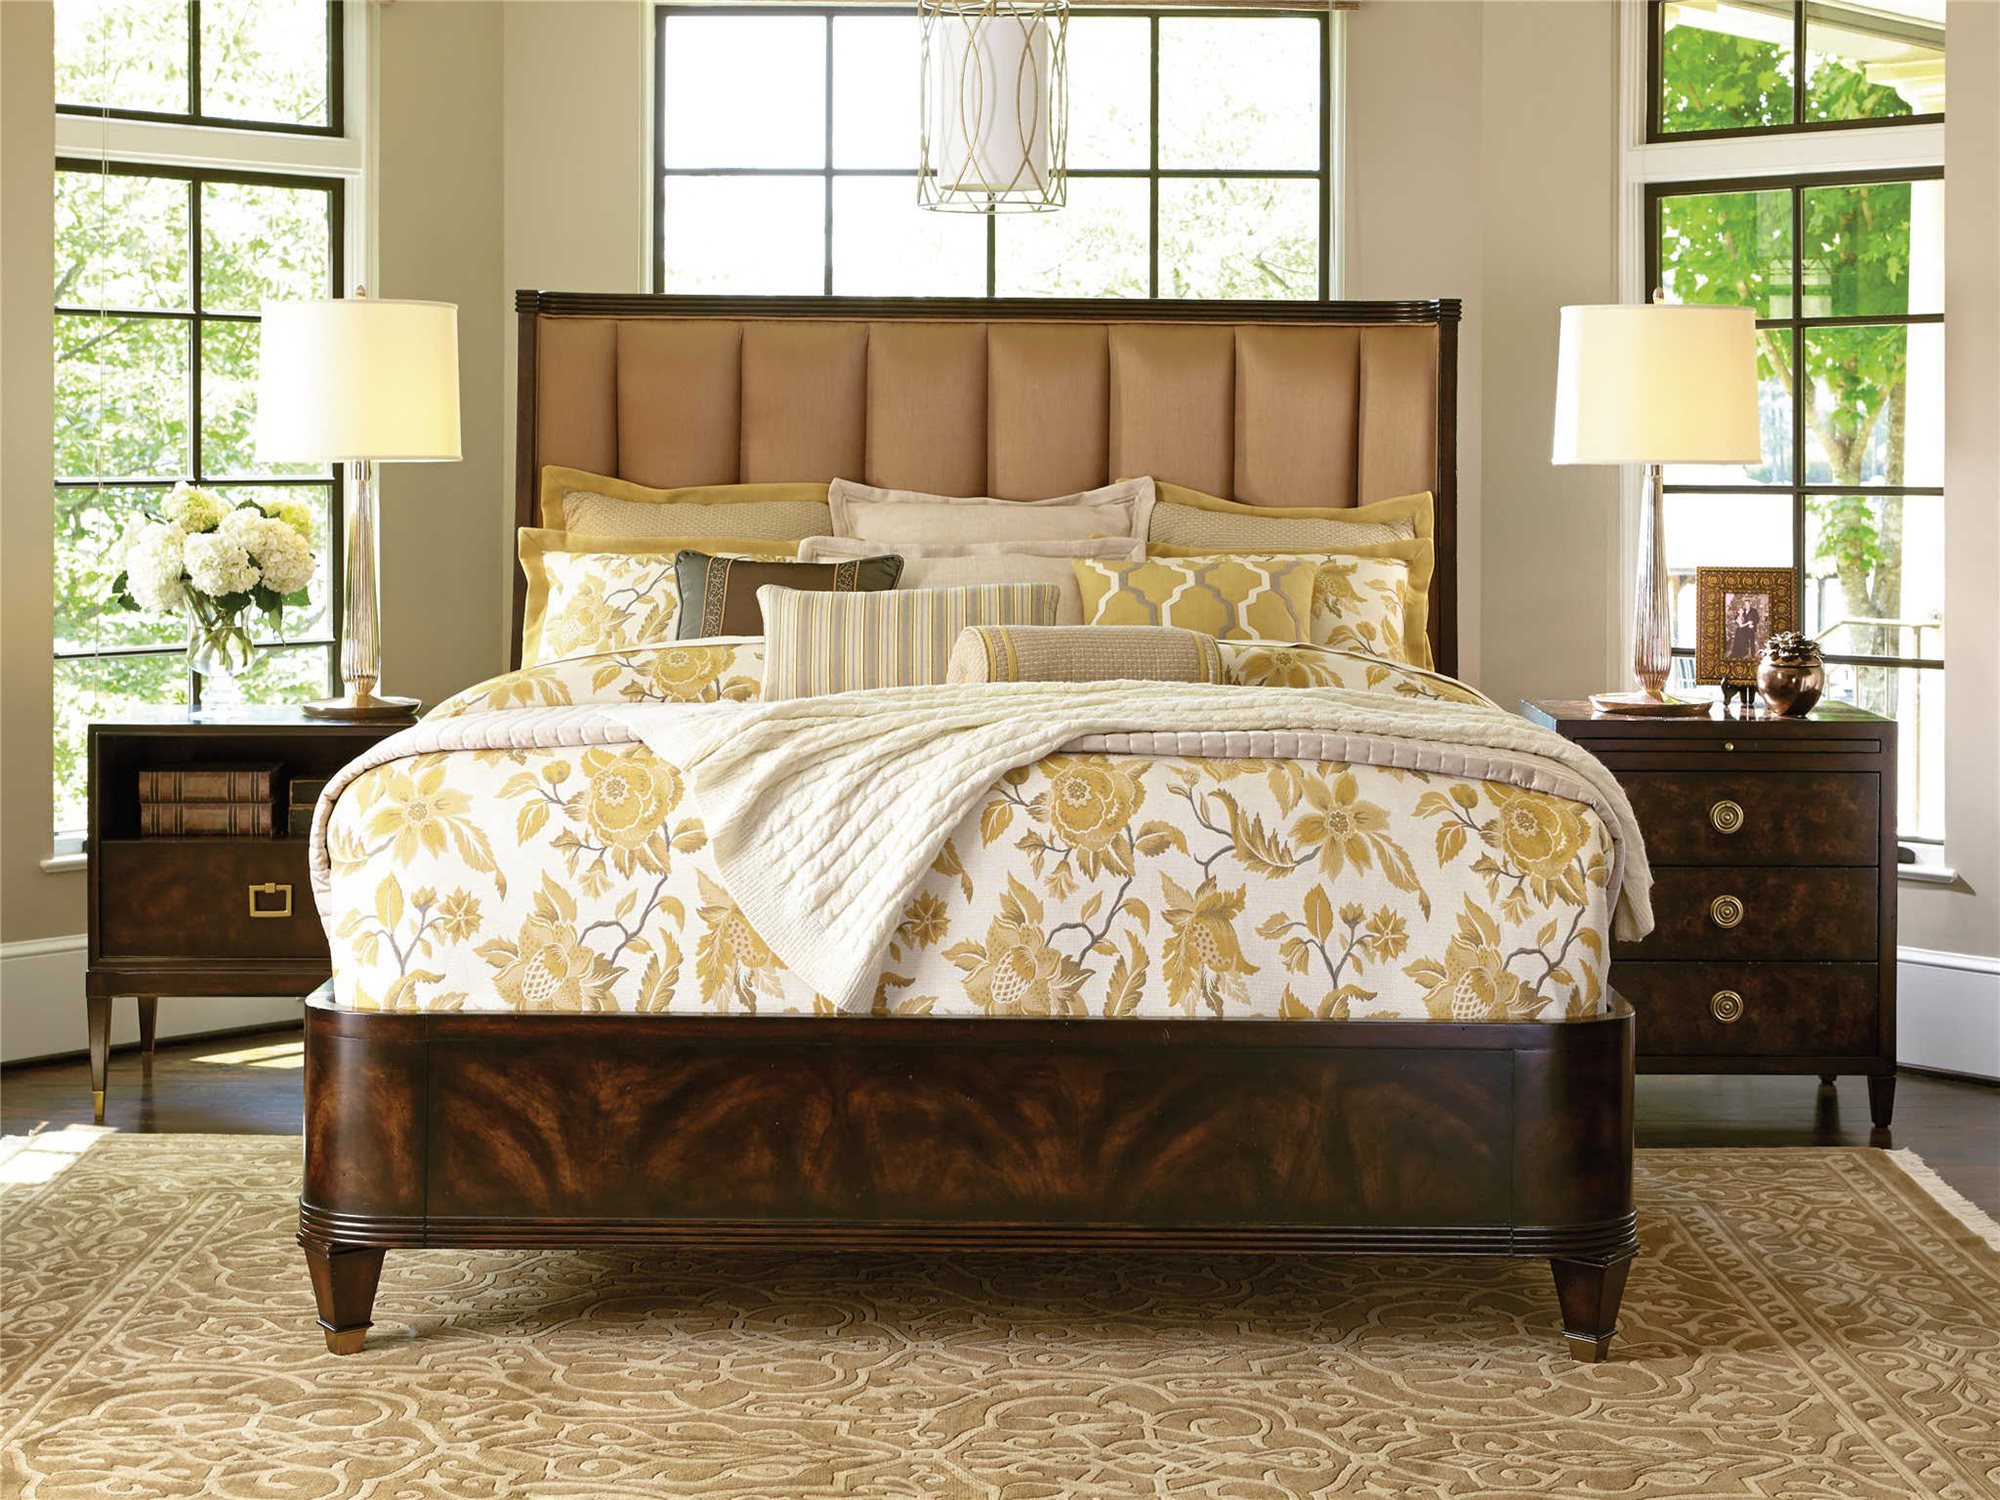 humphrey bogart bedroom furniture collection